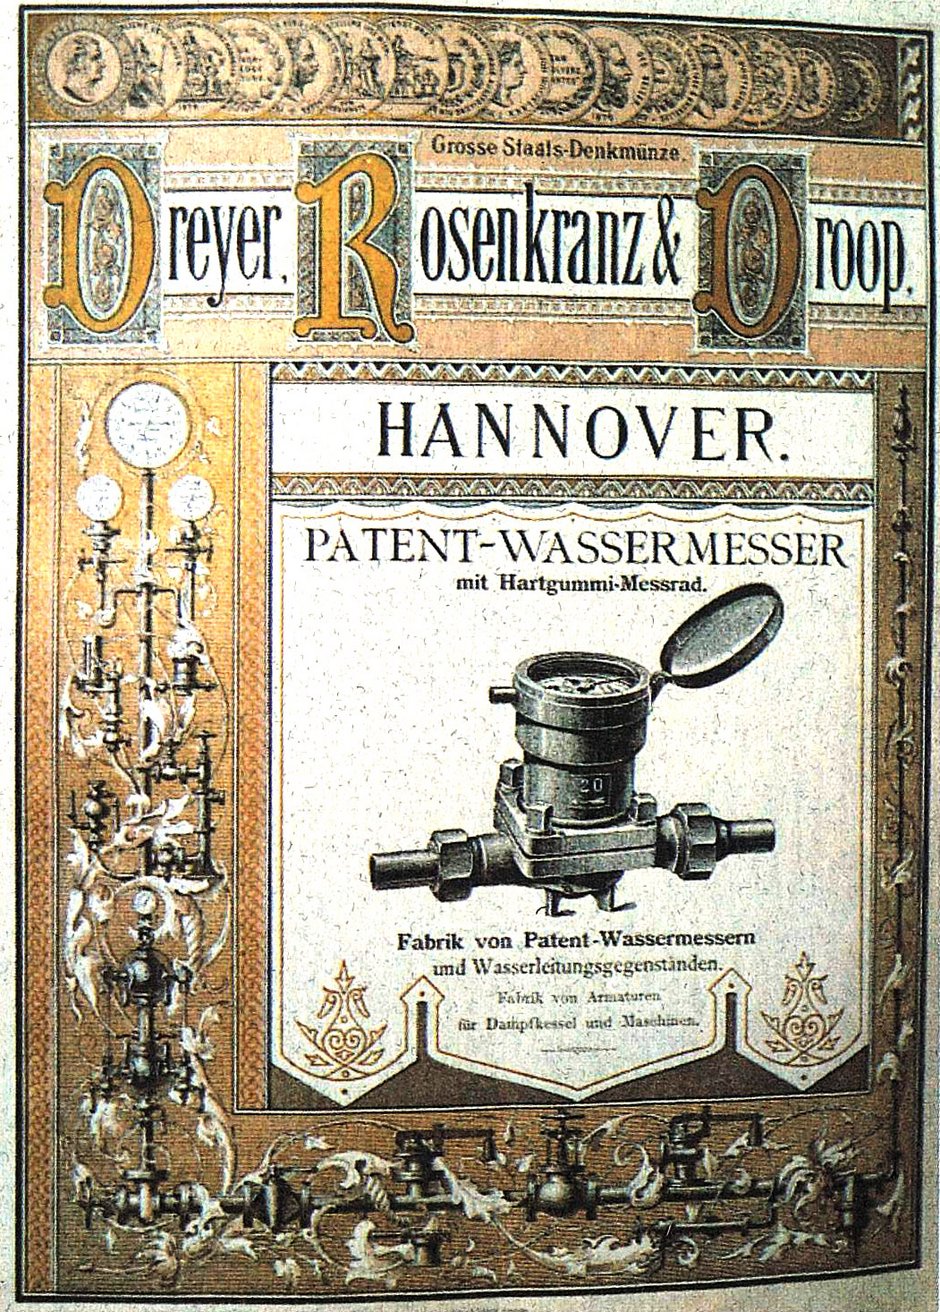 Das Patent des Wassermessers mit Hartgummi Messrad.